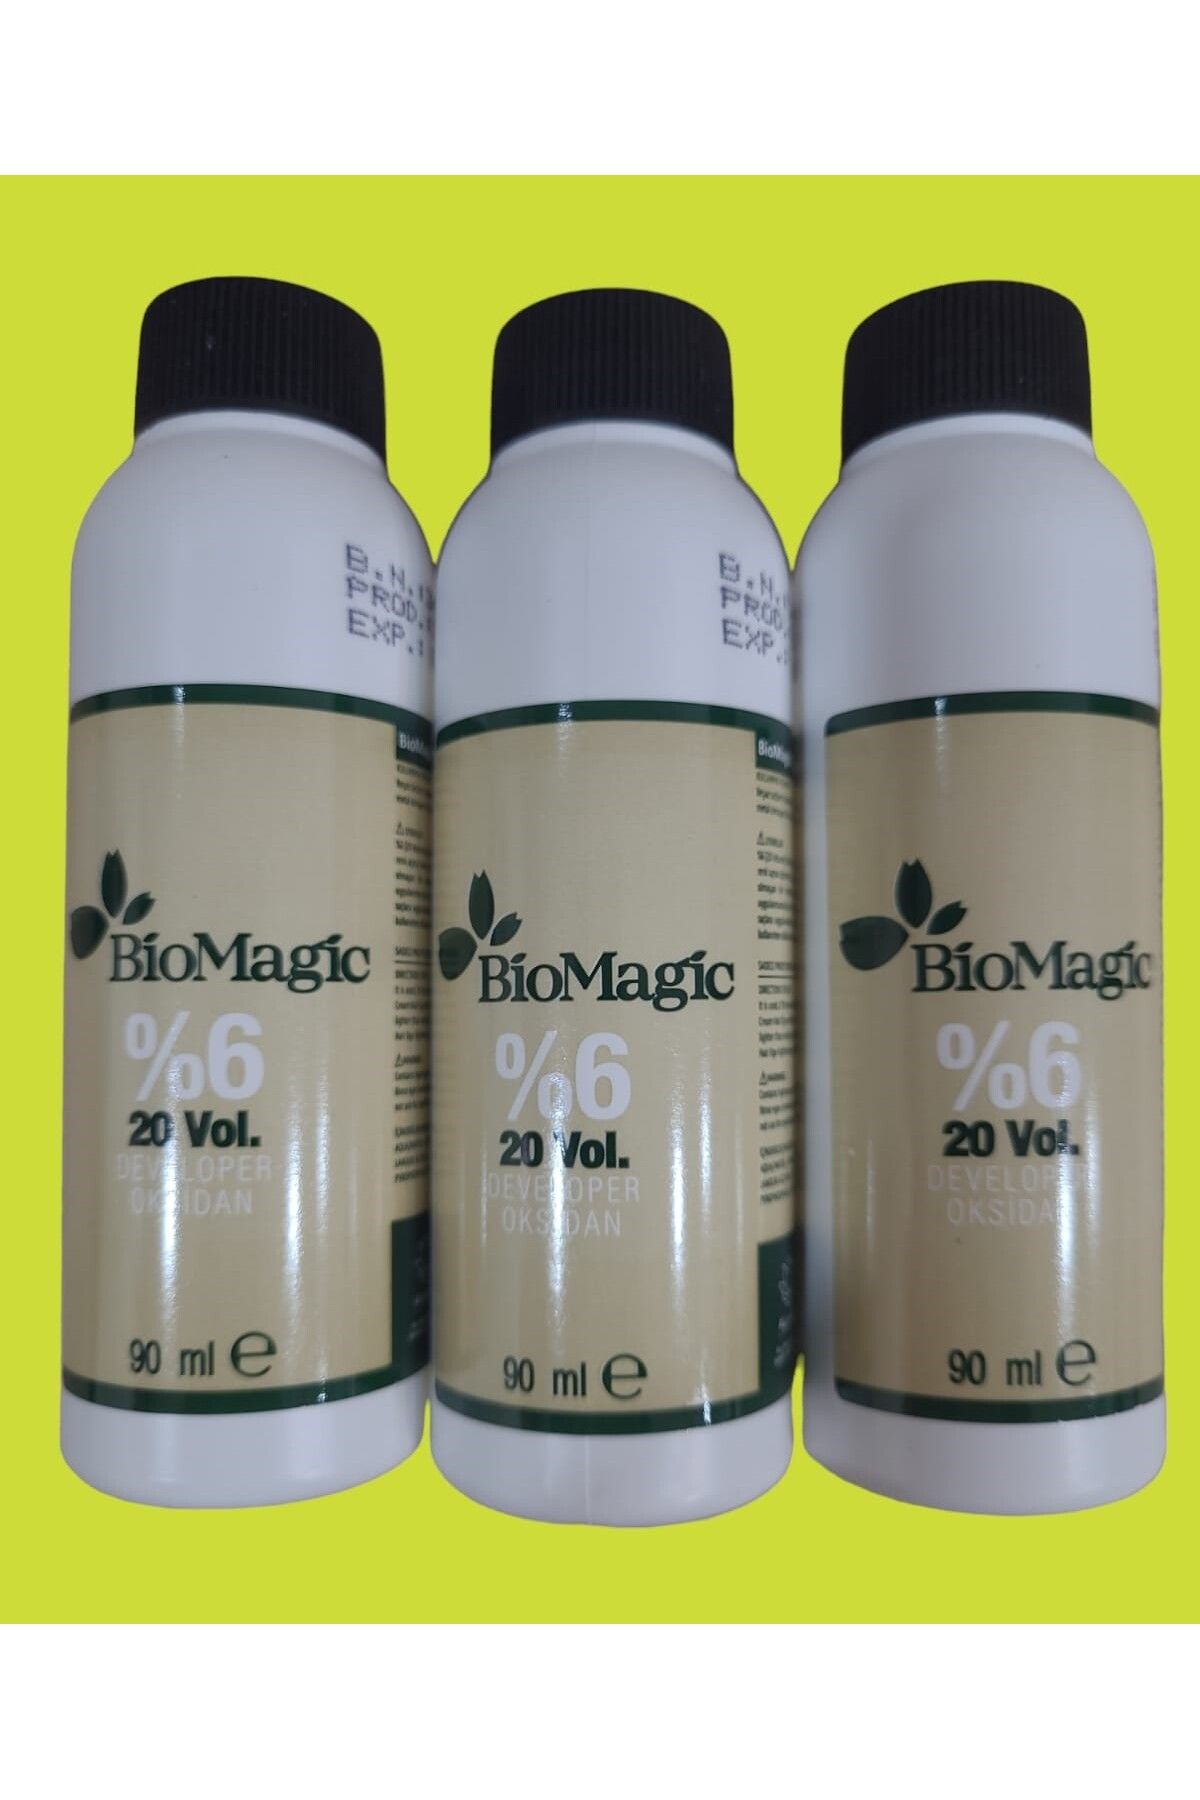 BioMagic Yeni 20 Volum (%6) Developer Oksidan 90 ml x 3 ADET (SIVI PEROKSİT)